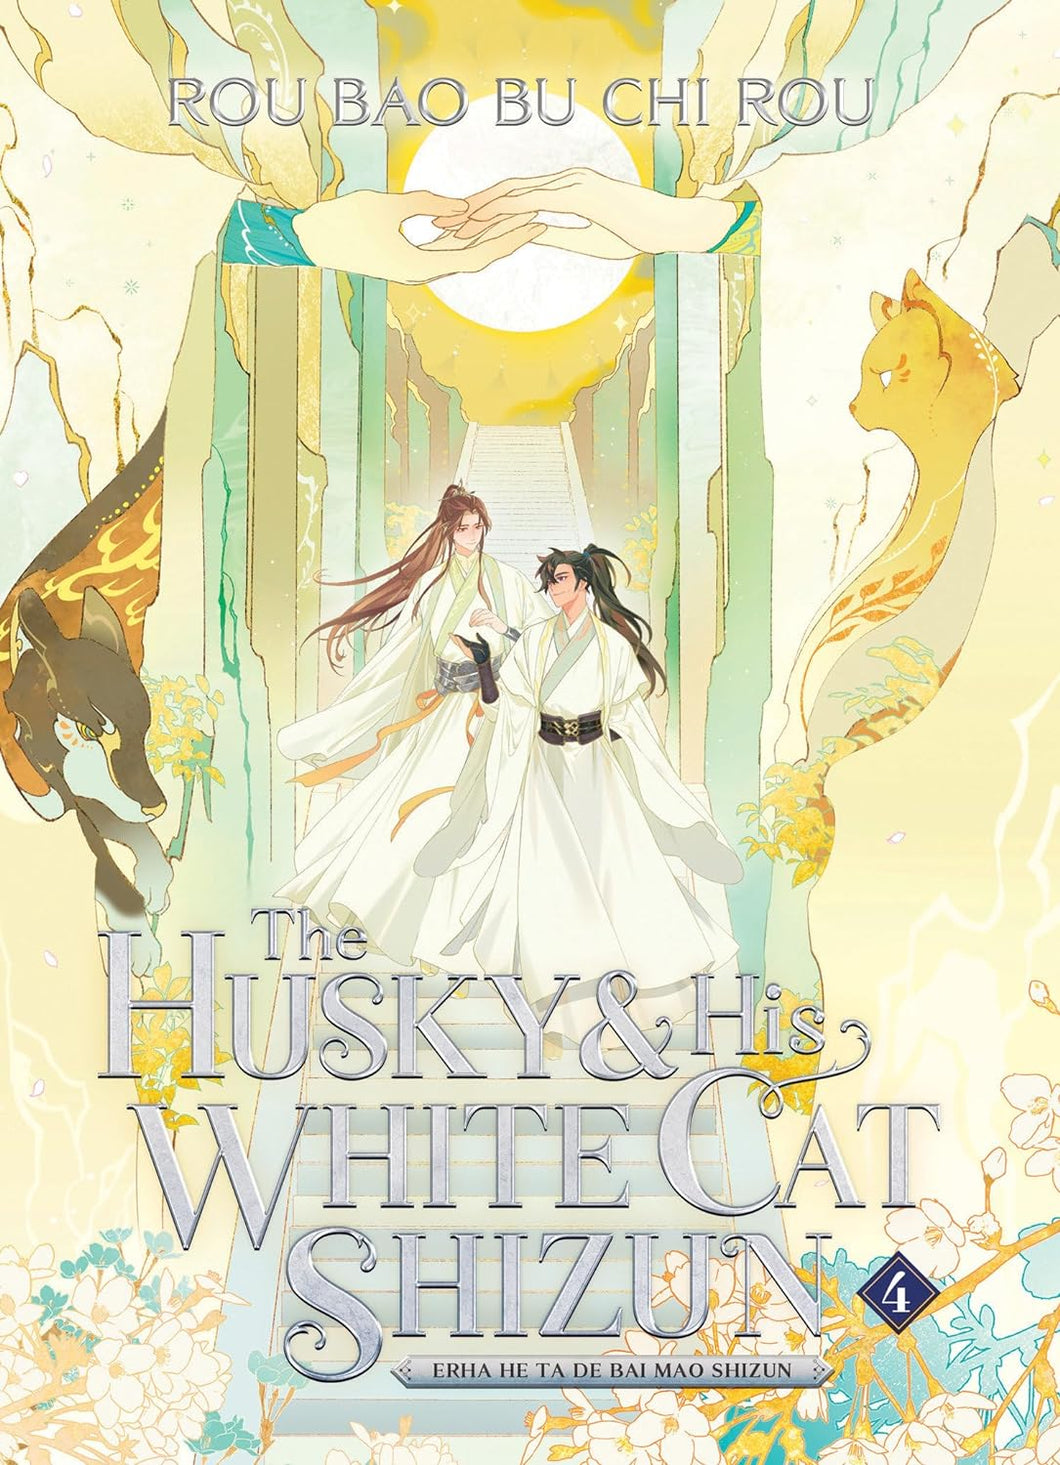 Husky and His White Cat Shizun: Erha He Ta De Bai Mao Shizun (Novel) Vol. 4